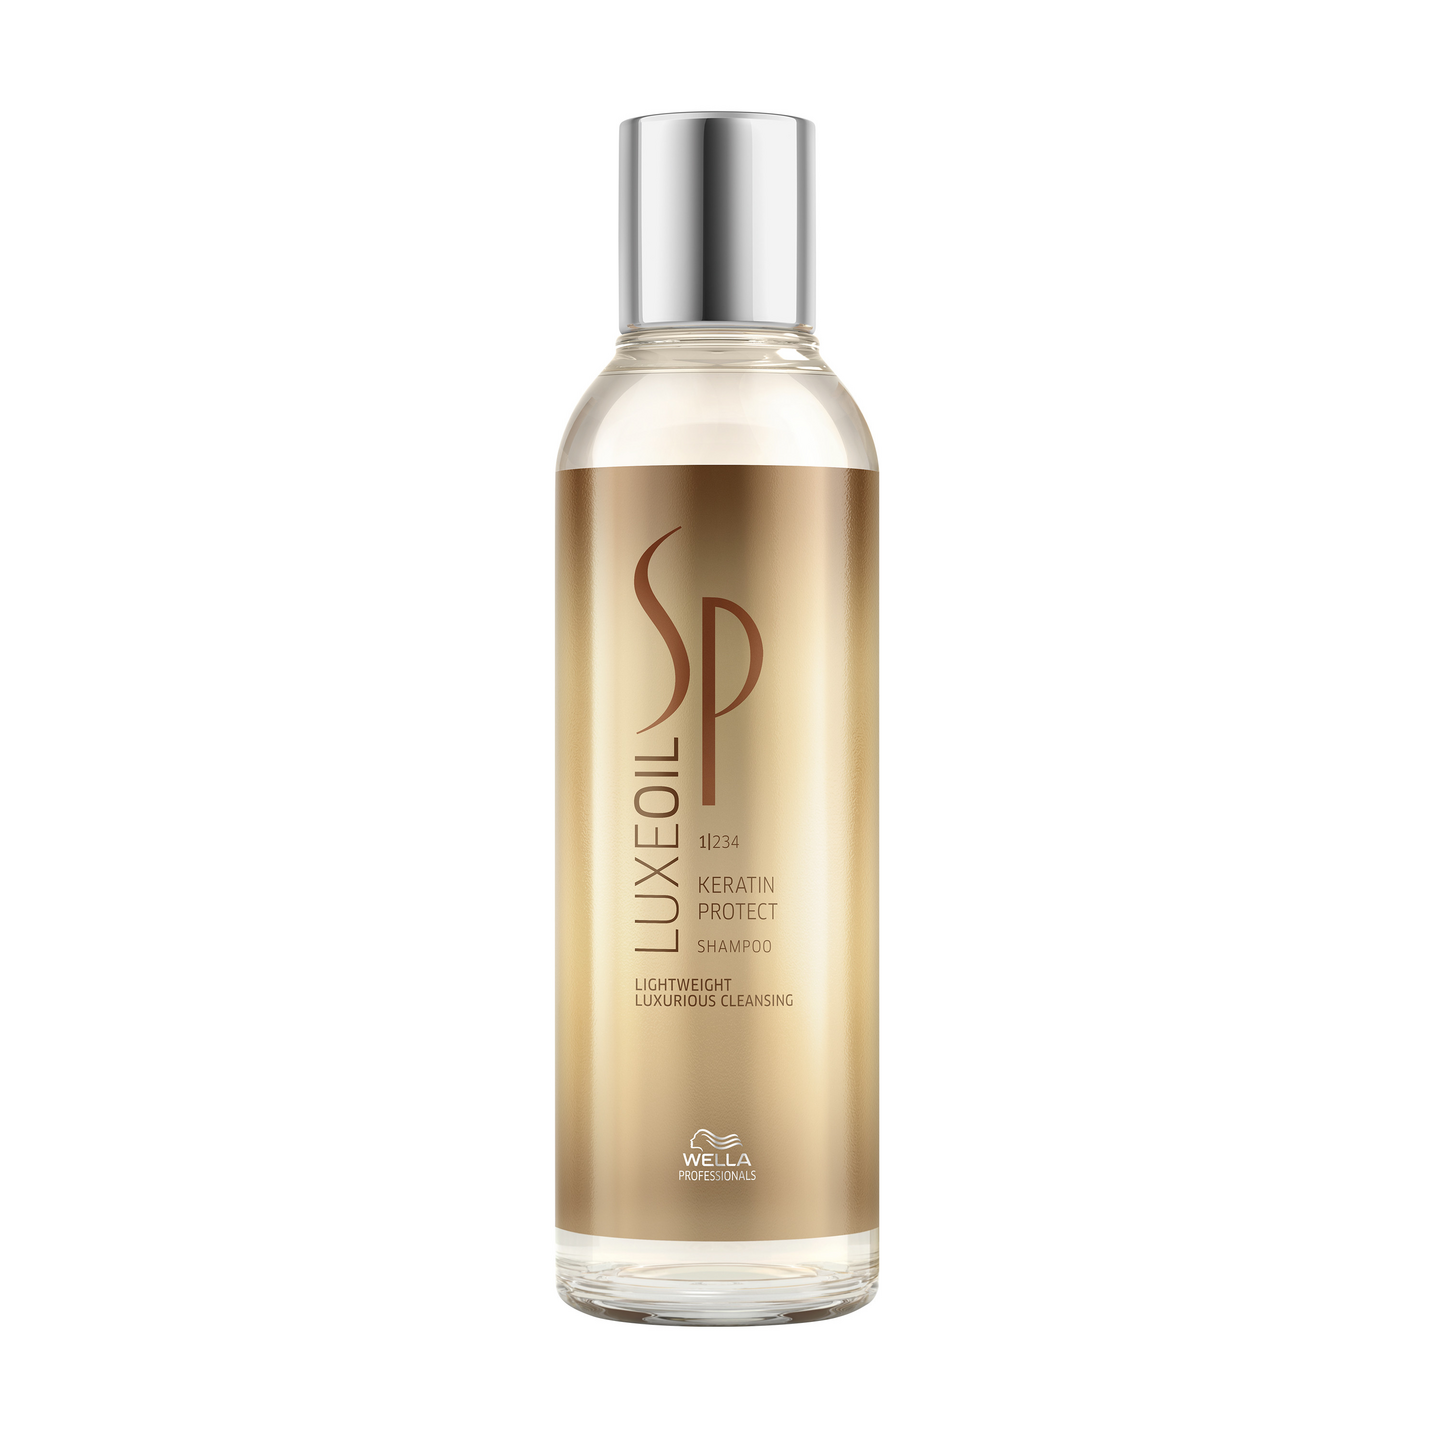 Wella Professional SP Luxe Oil shampoo 200ml Keratin